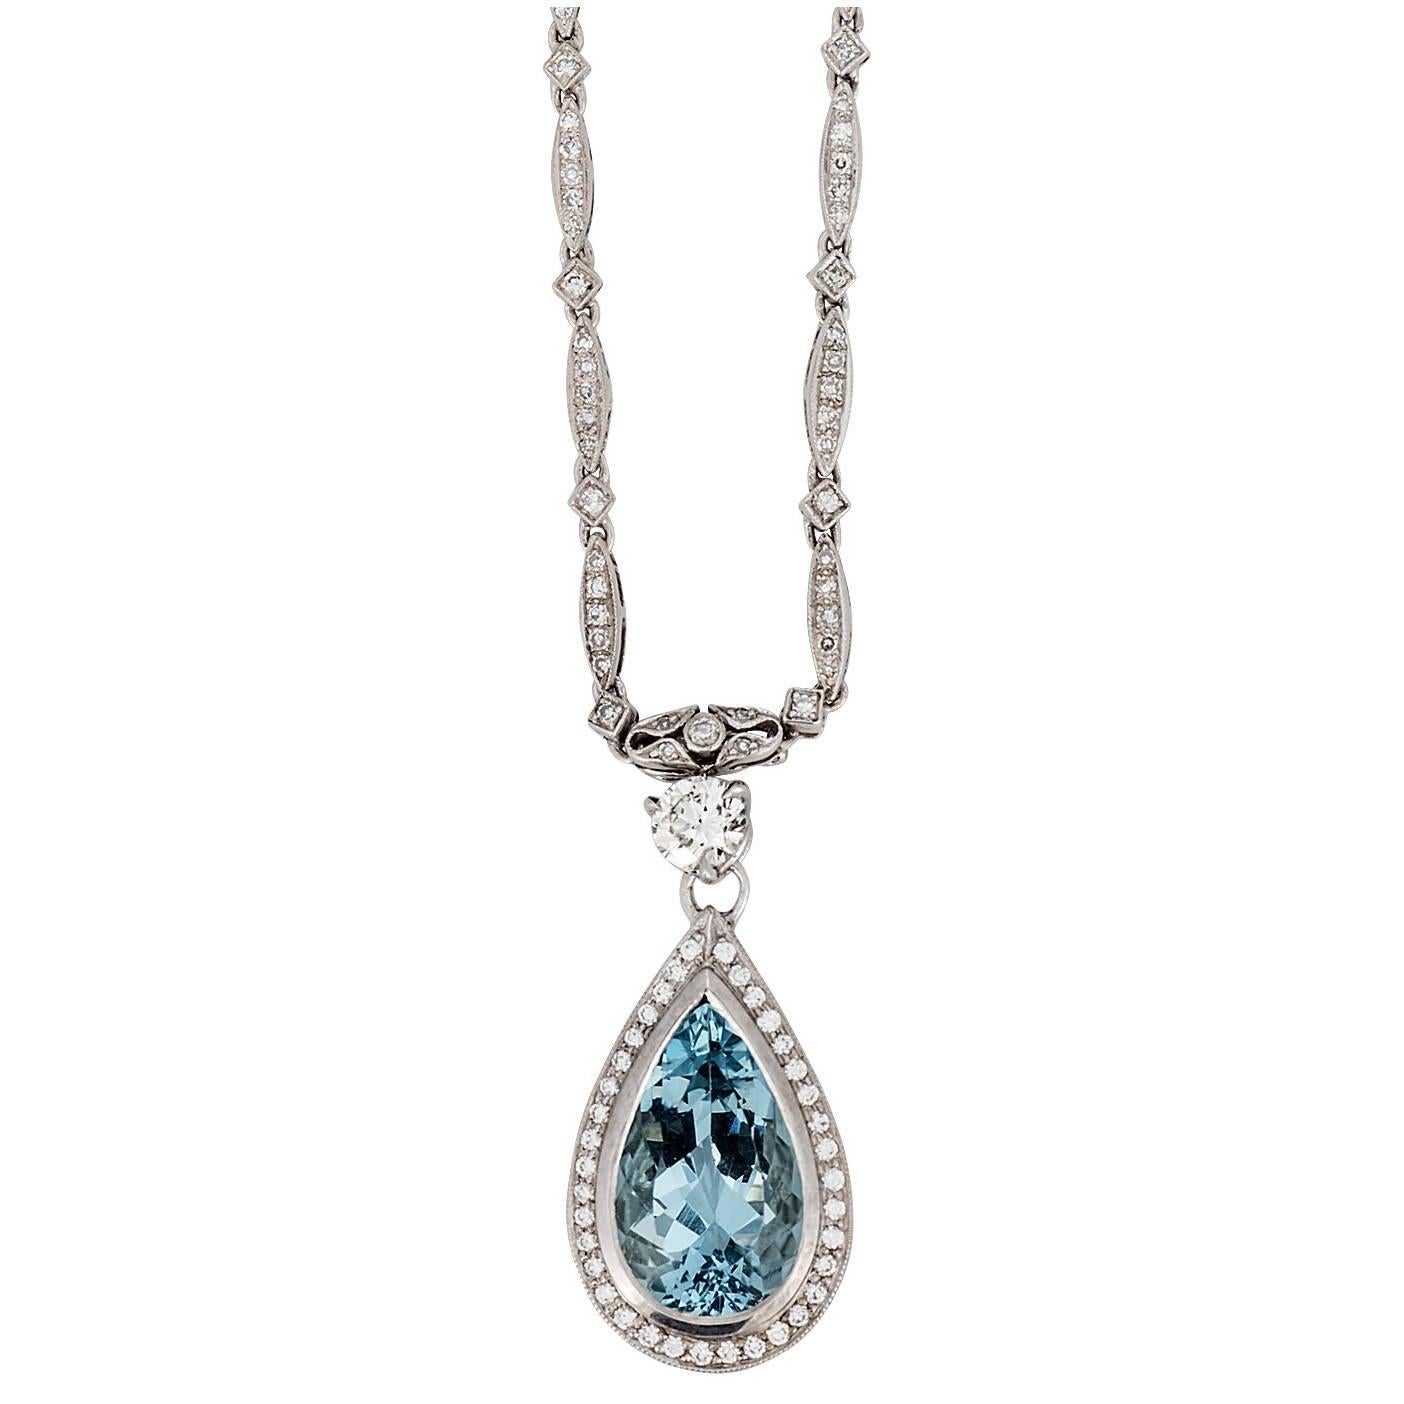 4.41 Carat Pear Shape Aquamarine and Diamond White Gold Pendant Necklace